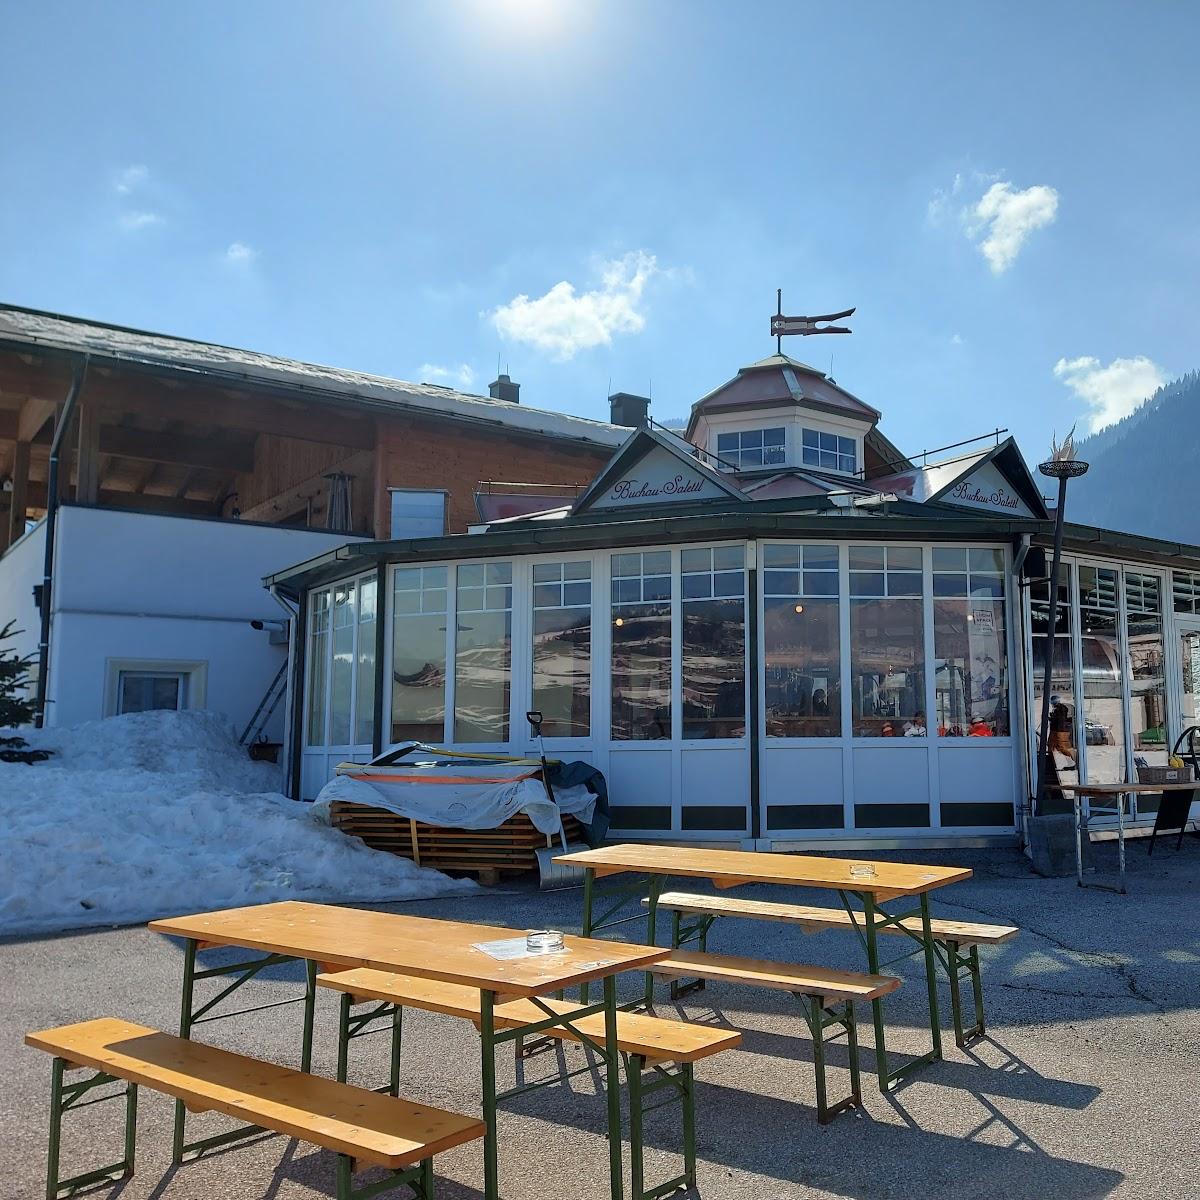 Restaurant "Buchau Salettl" in Sankt Johann im Pongau